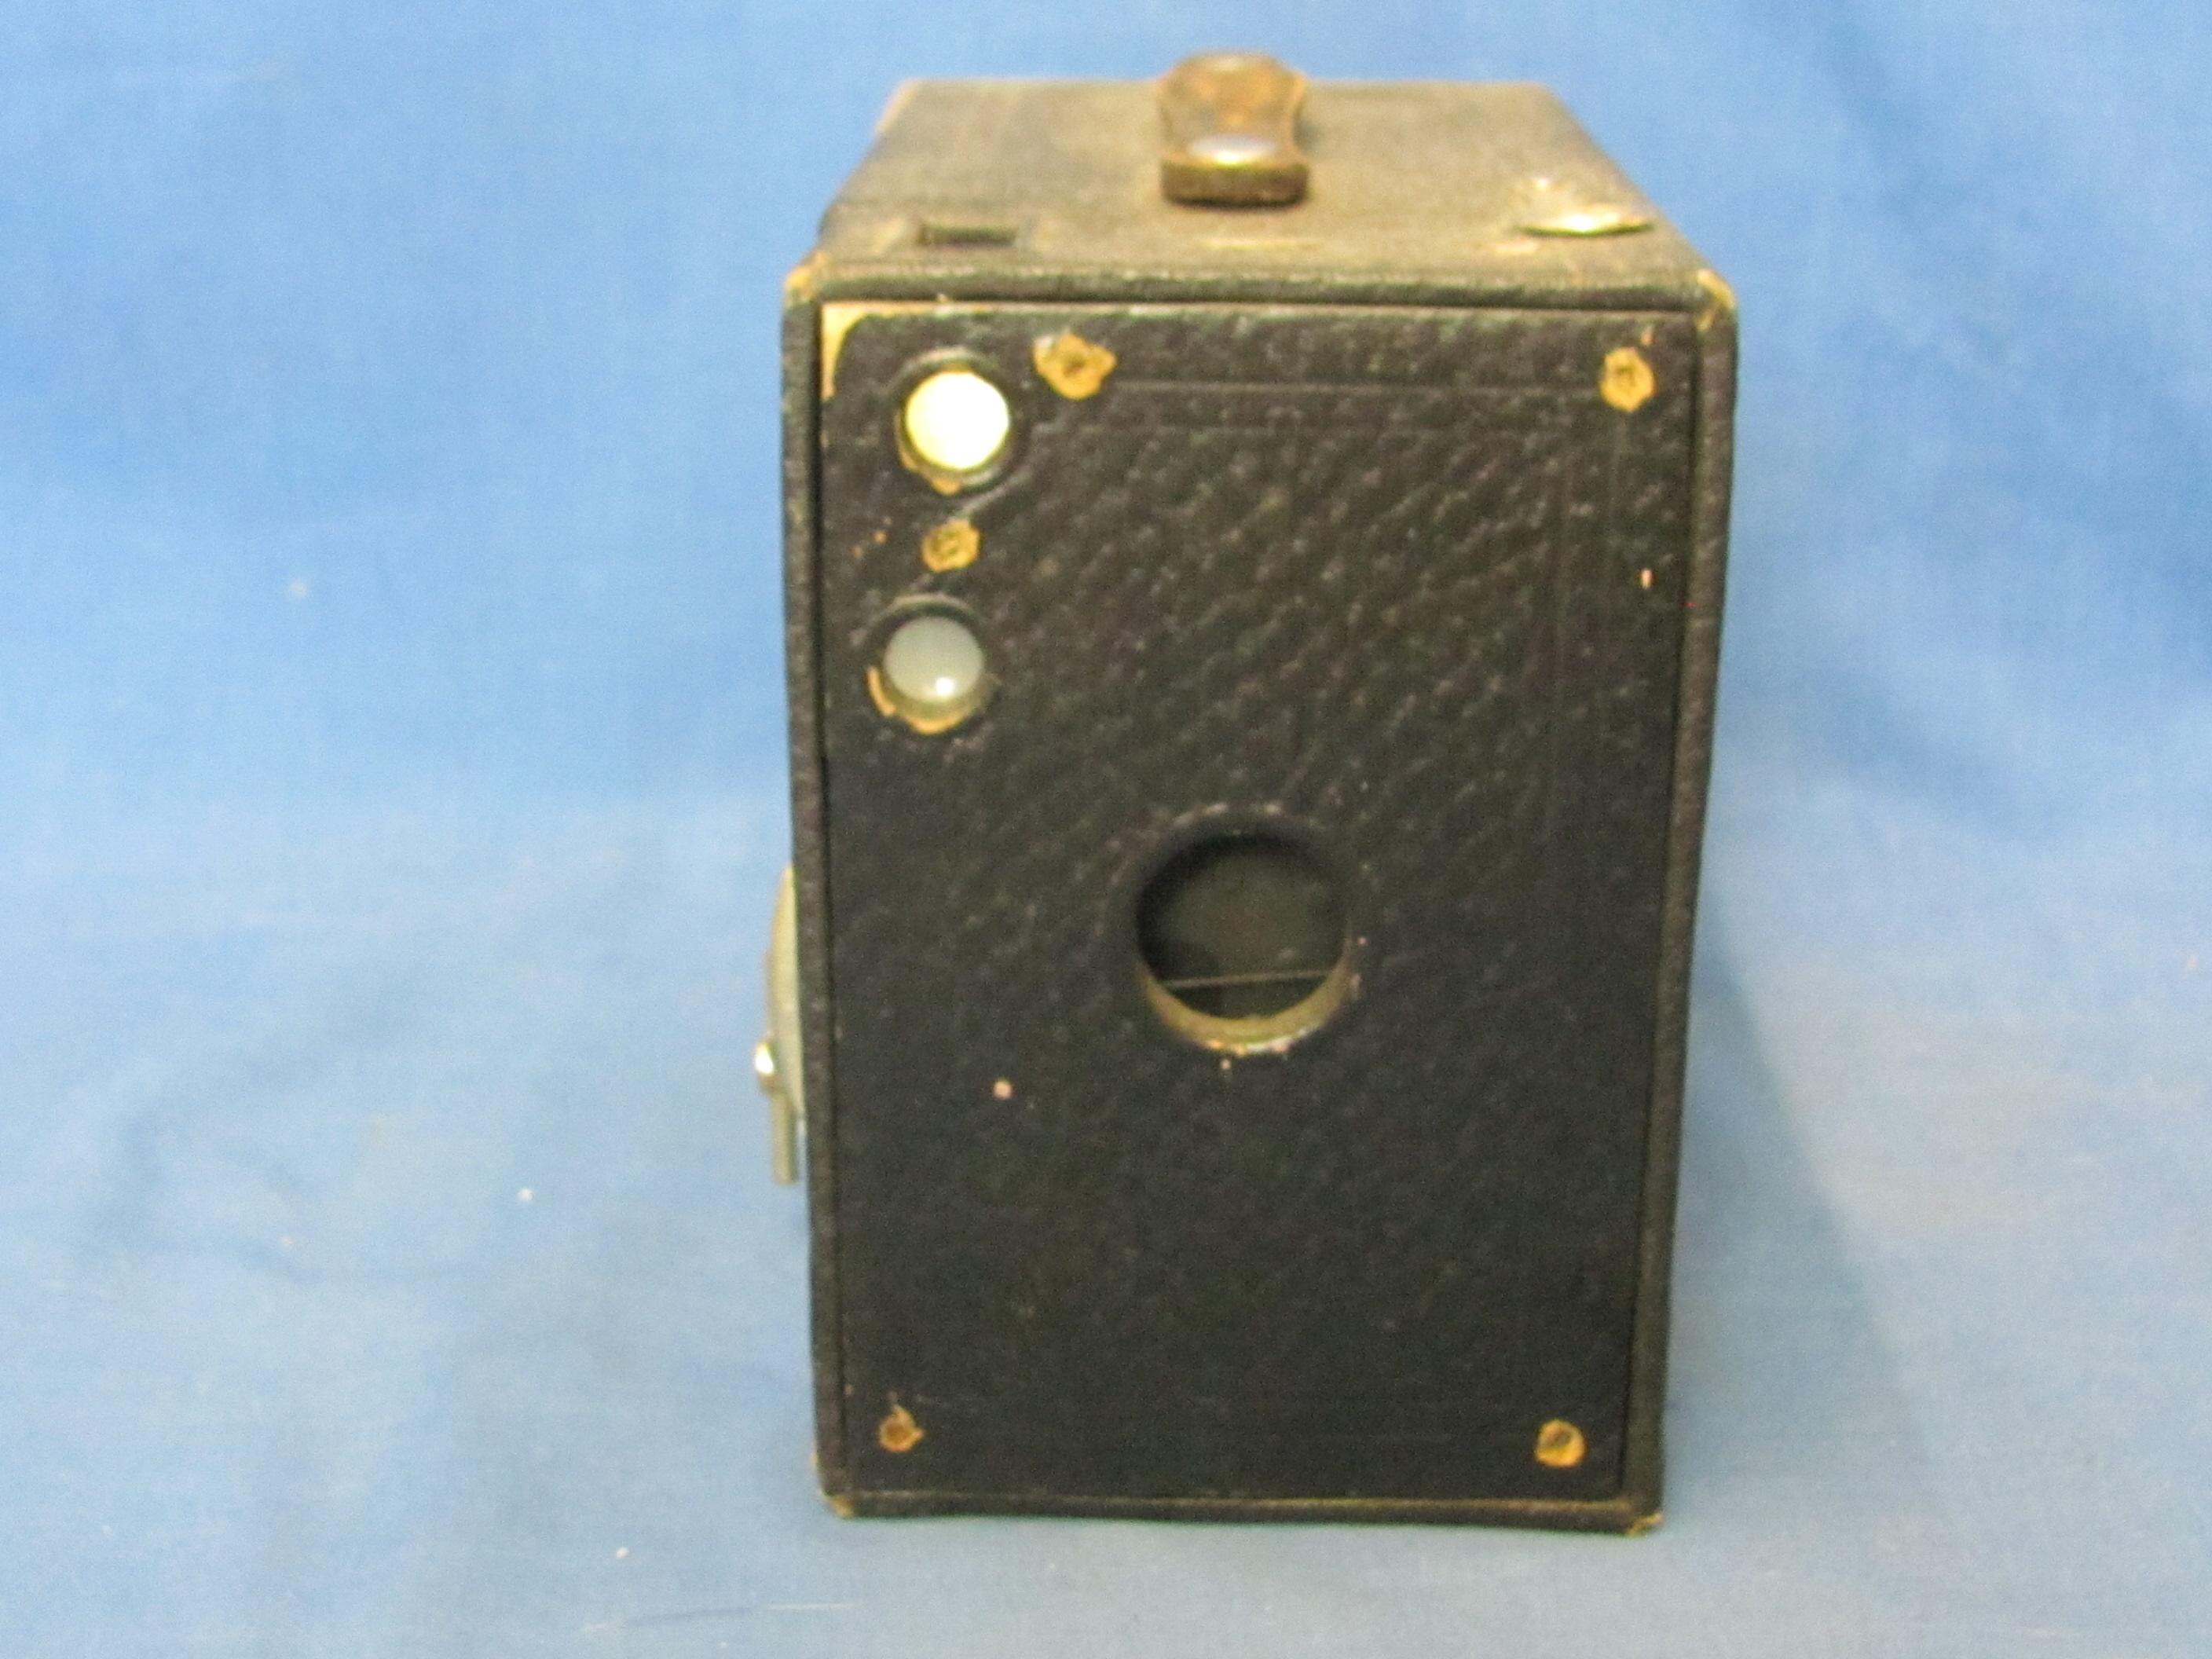 Eastman Kodak Brownie Box Camera – 3 3/8” x 6 1/8” - 5” T – Not Tested – As Shown